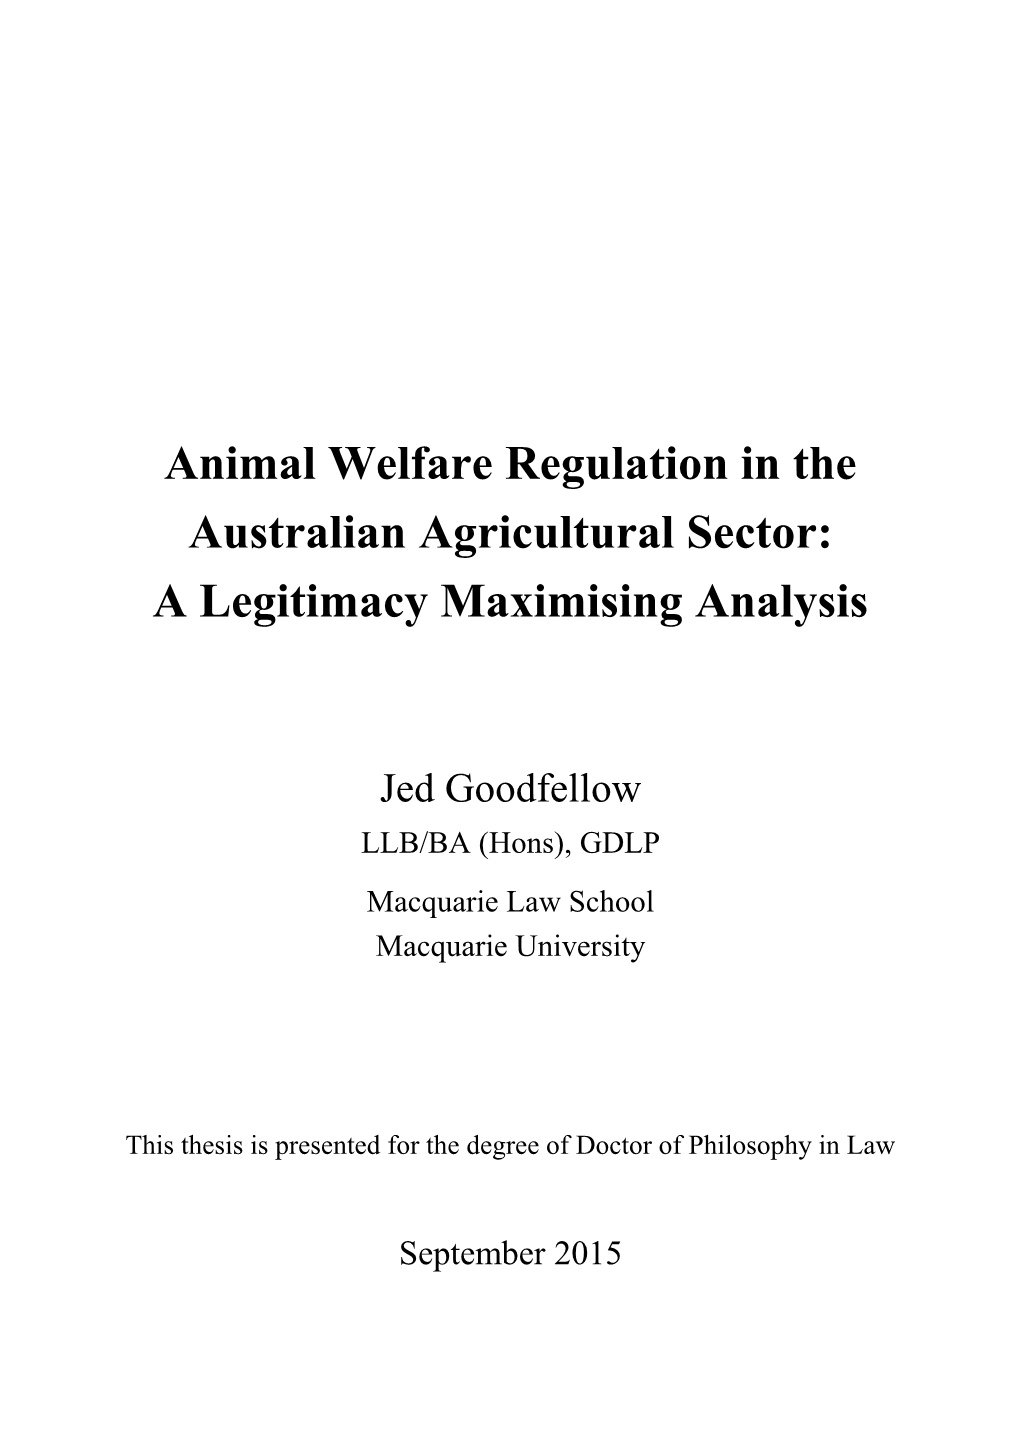 Animal Welfare Regulation in the Australian Agricultural Sector: a Legitimacy Maximising Analysis